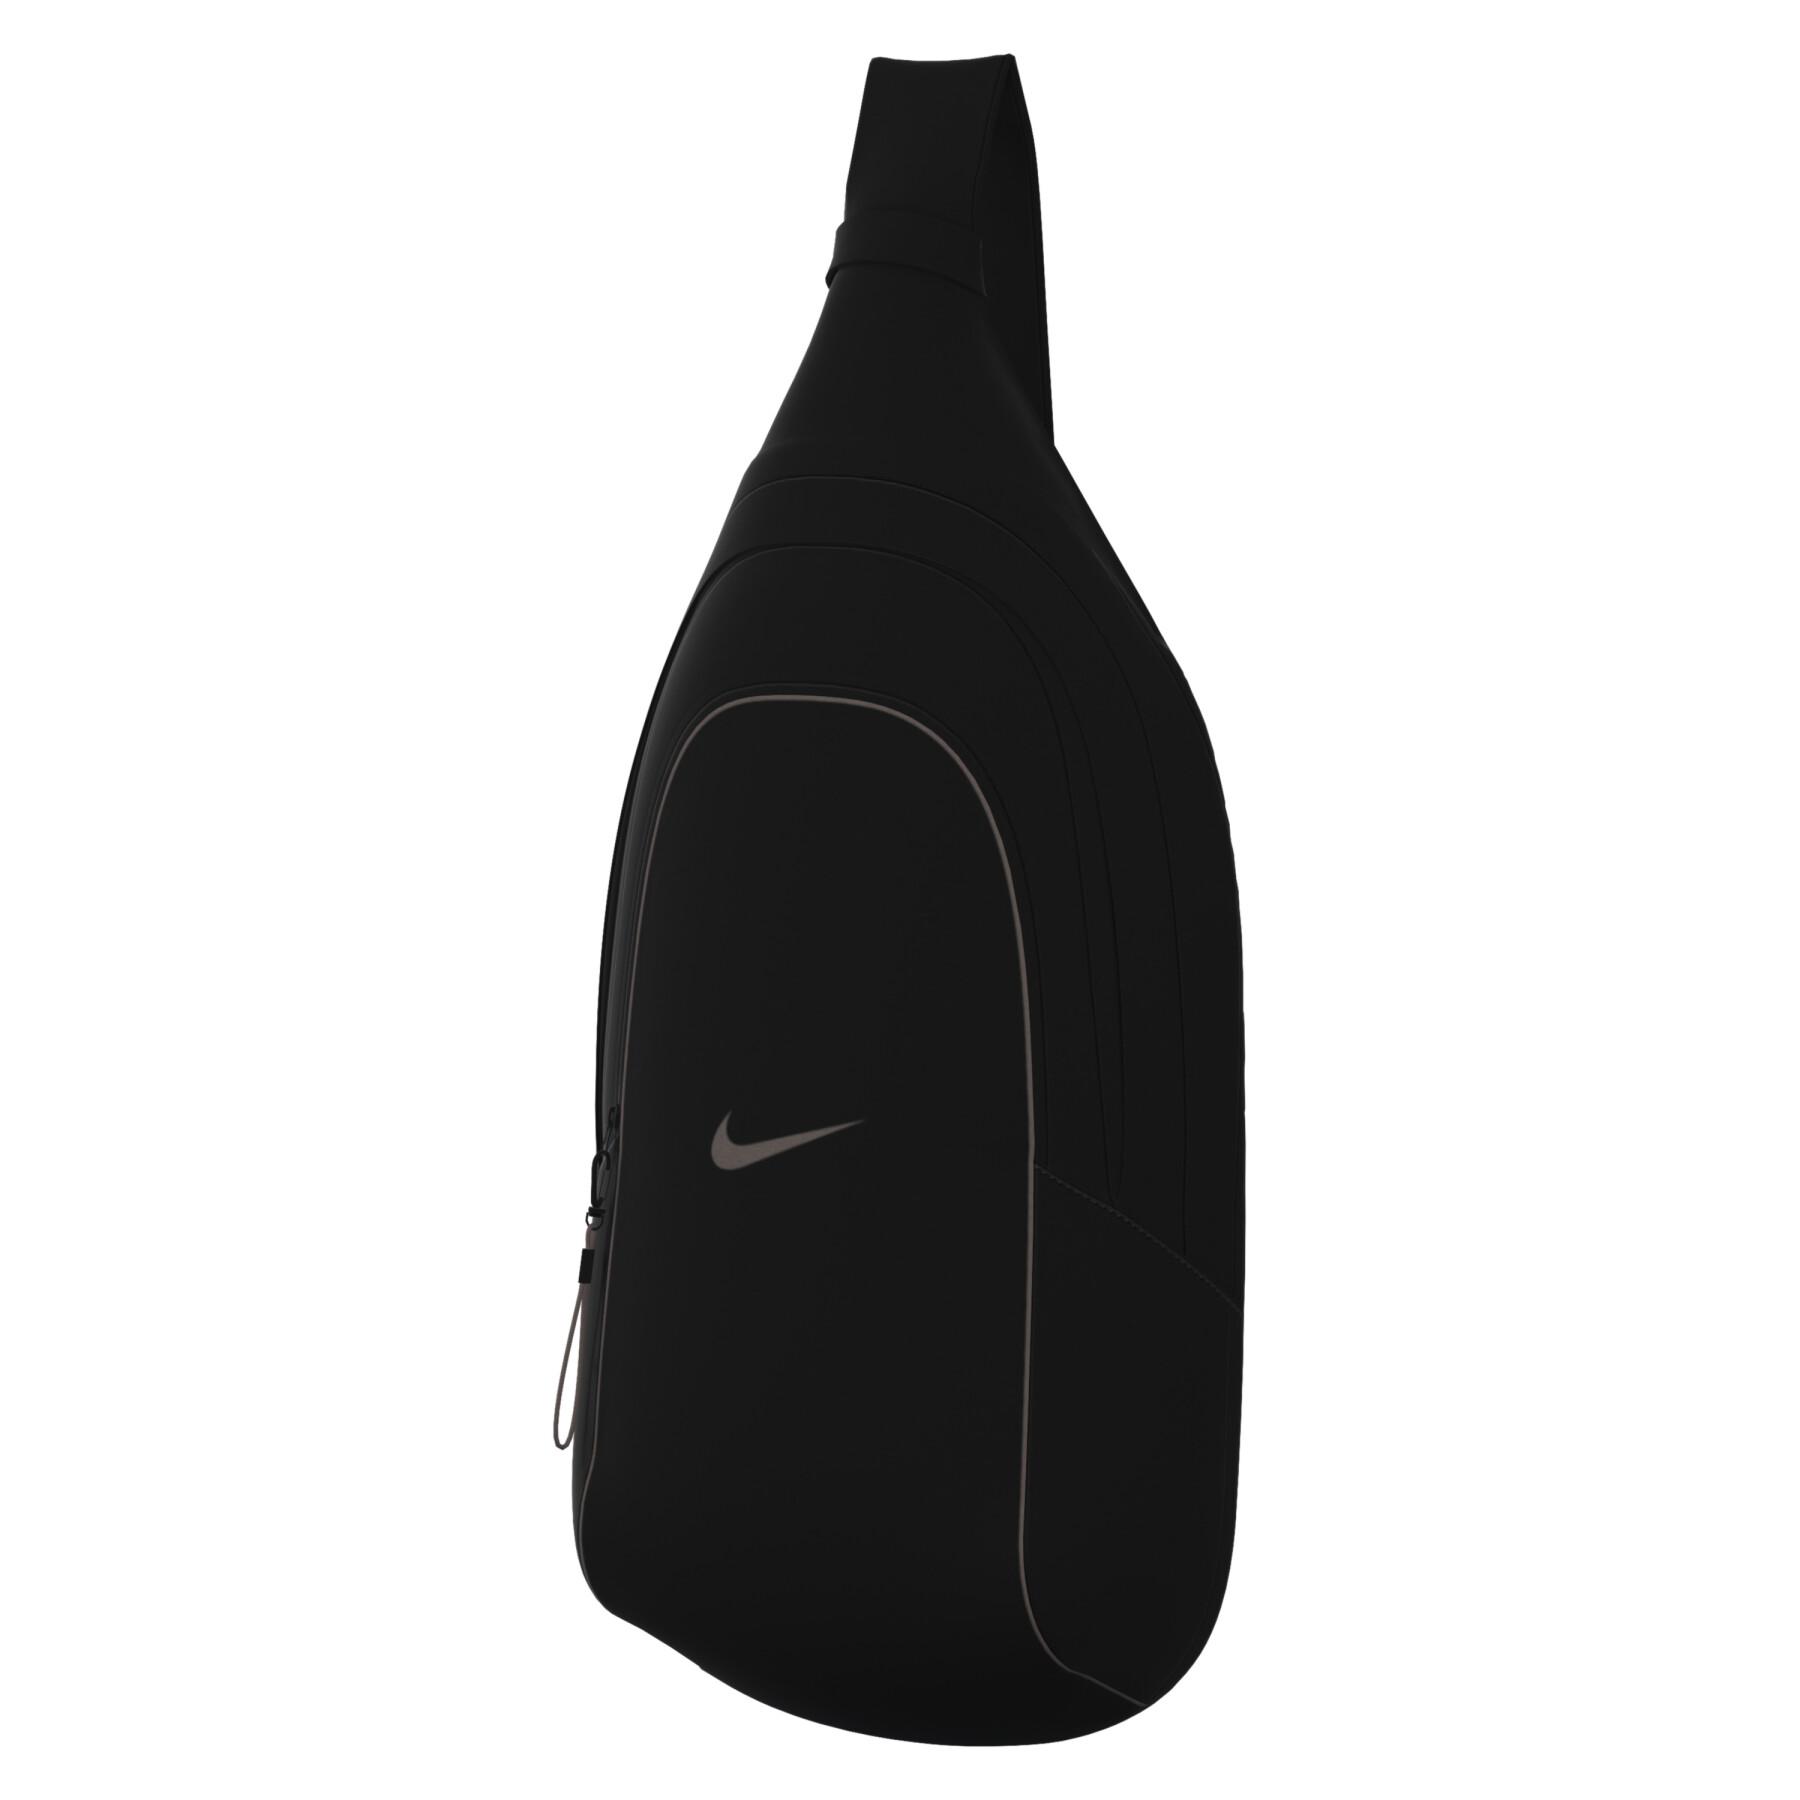 Axelremsväska Nike Sportswear Essentials